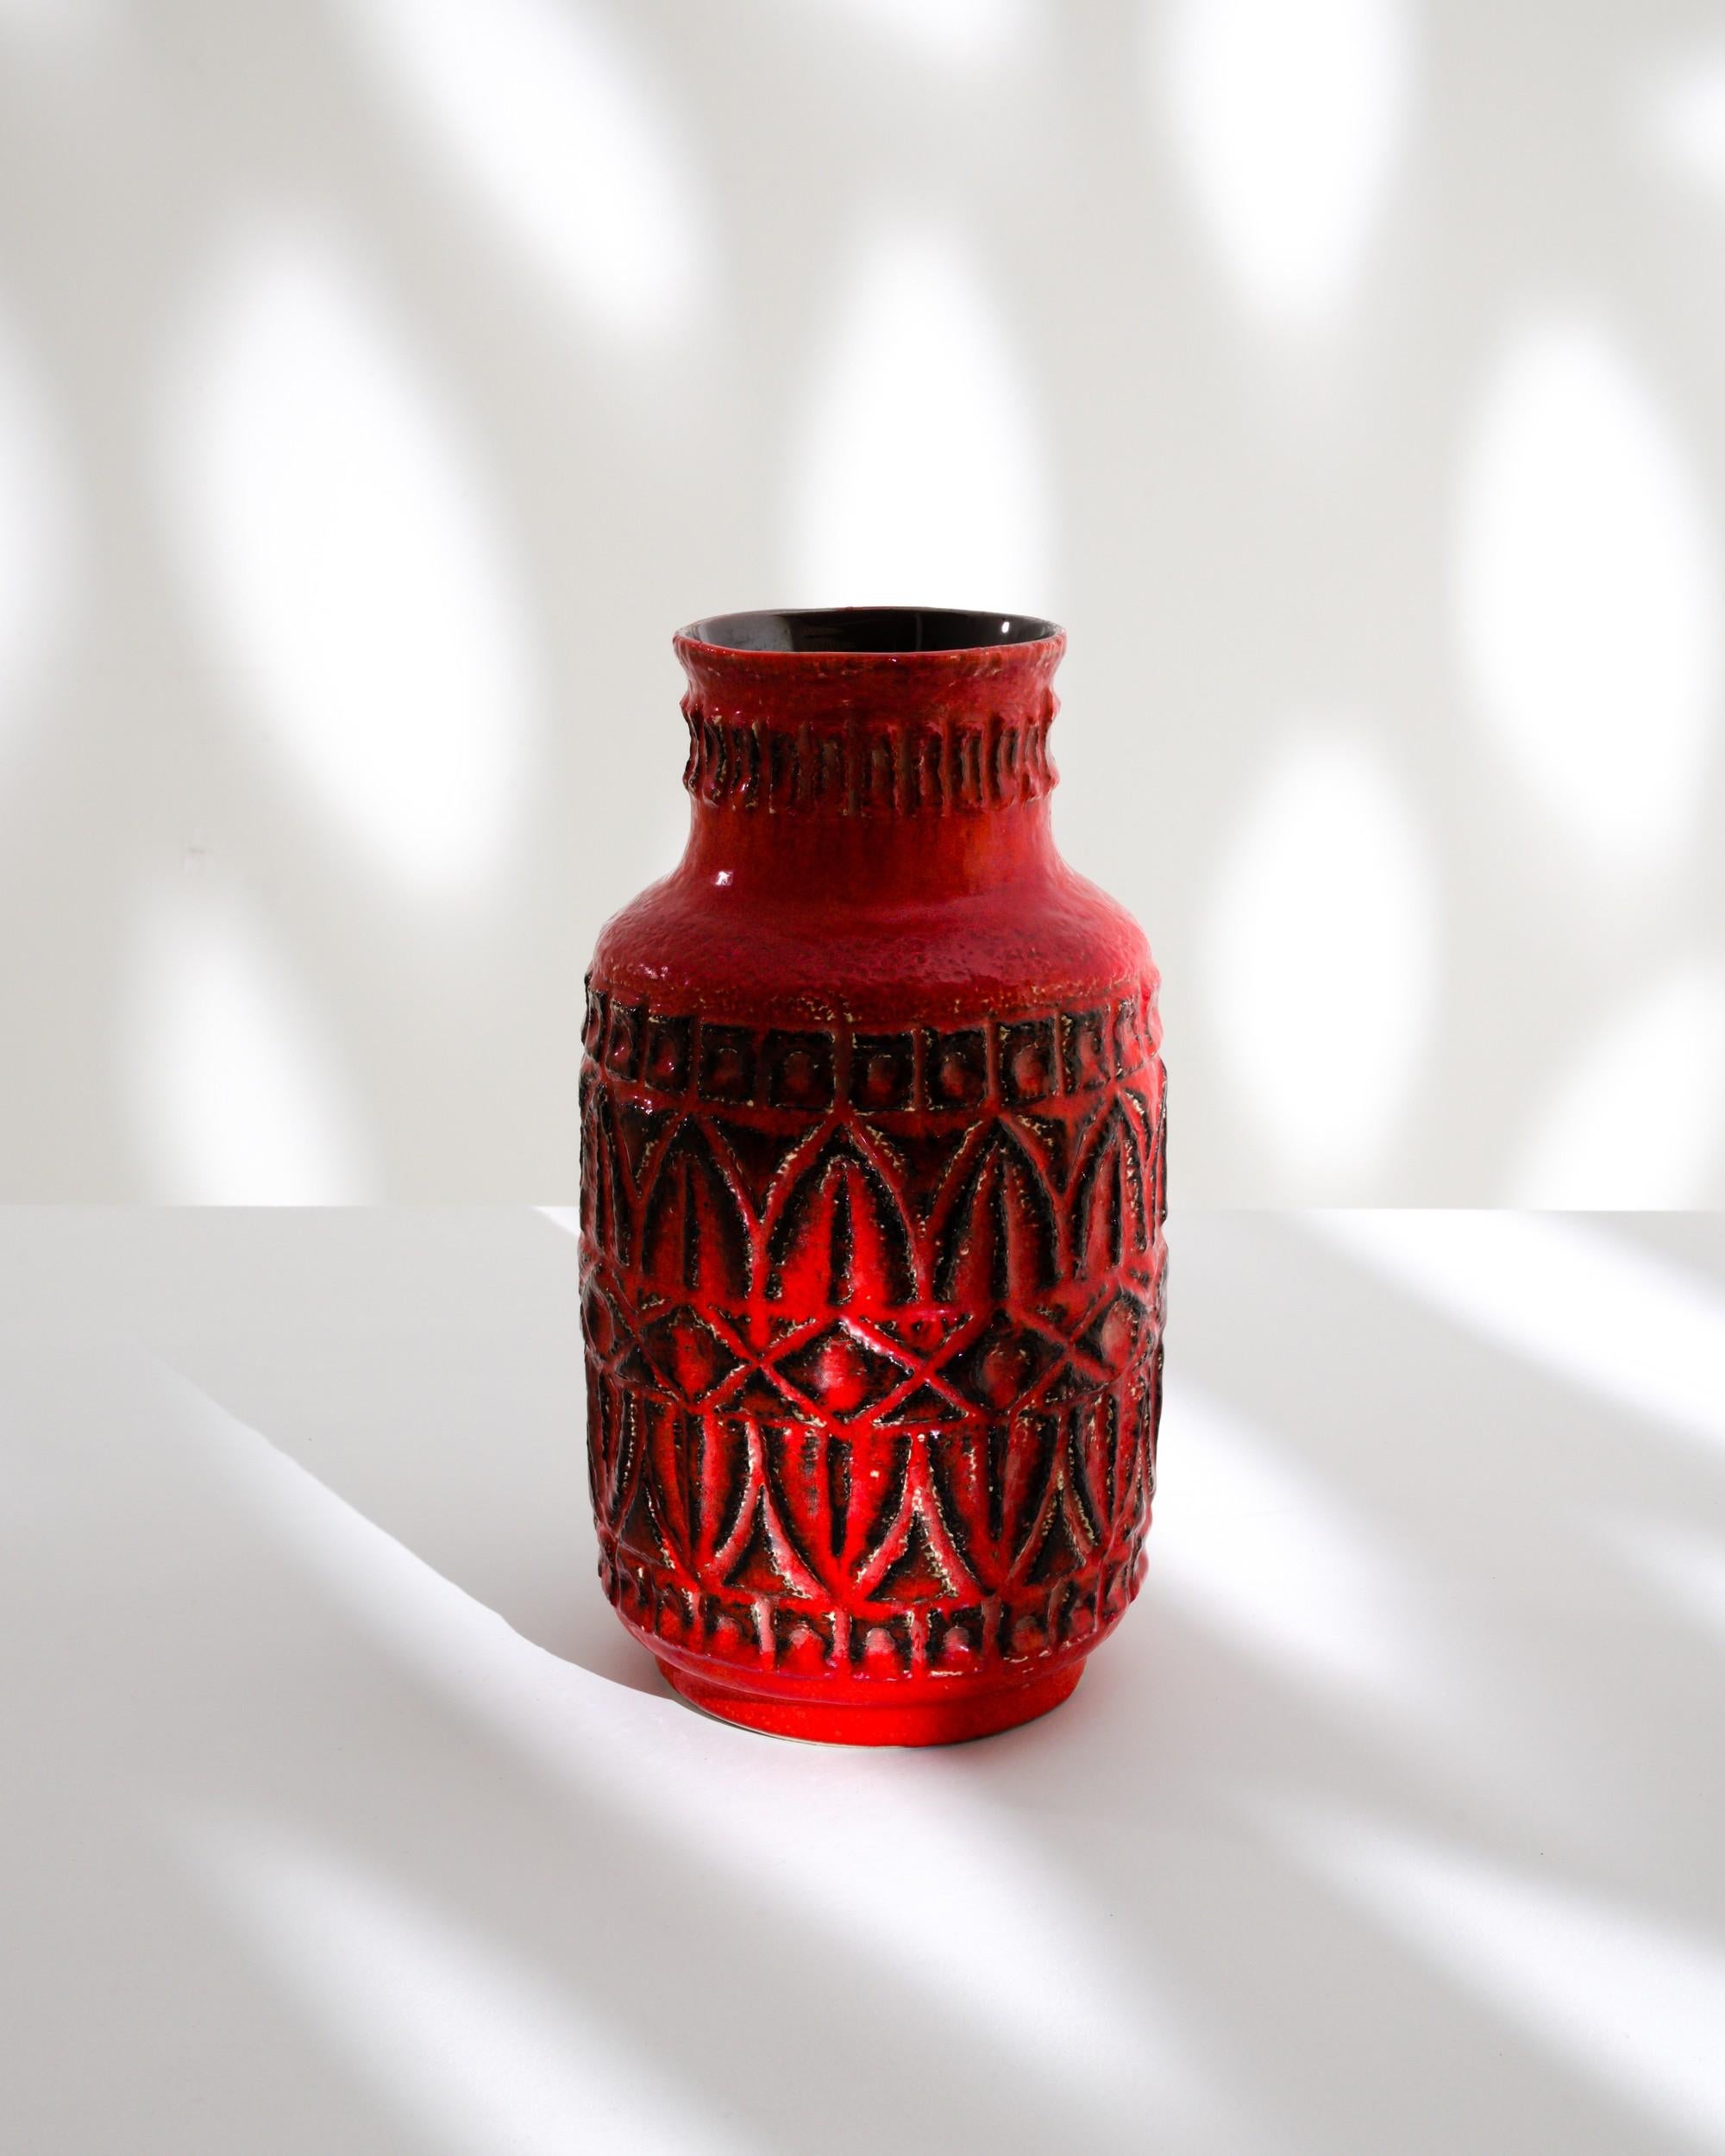 1960s Mid-Century Modern W. Germany Ceramic Vase For Sale 2